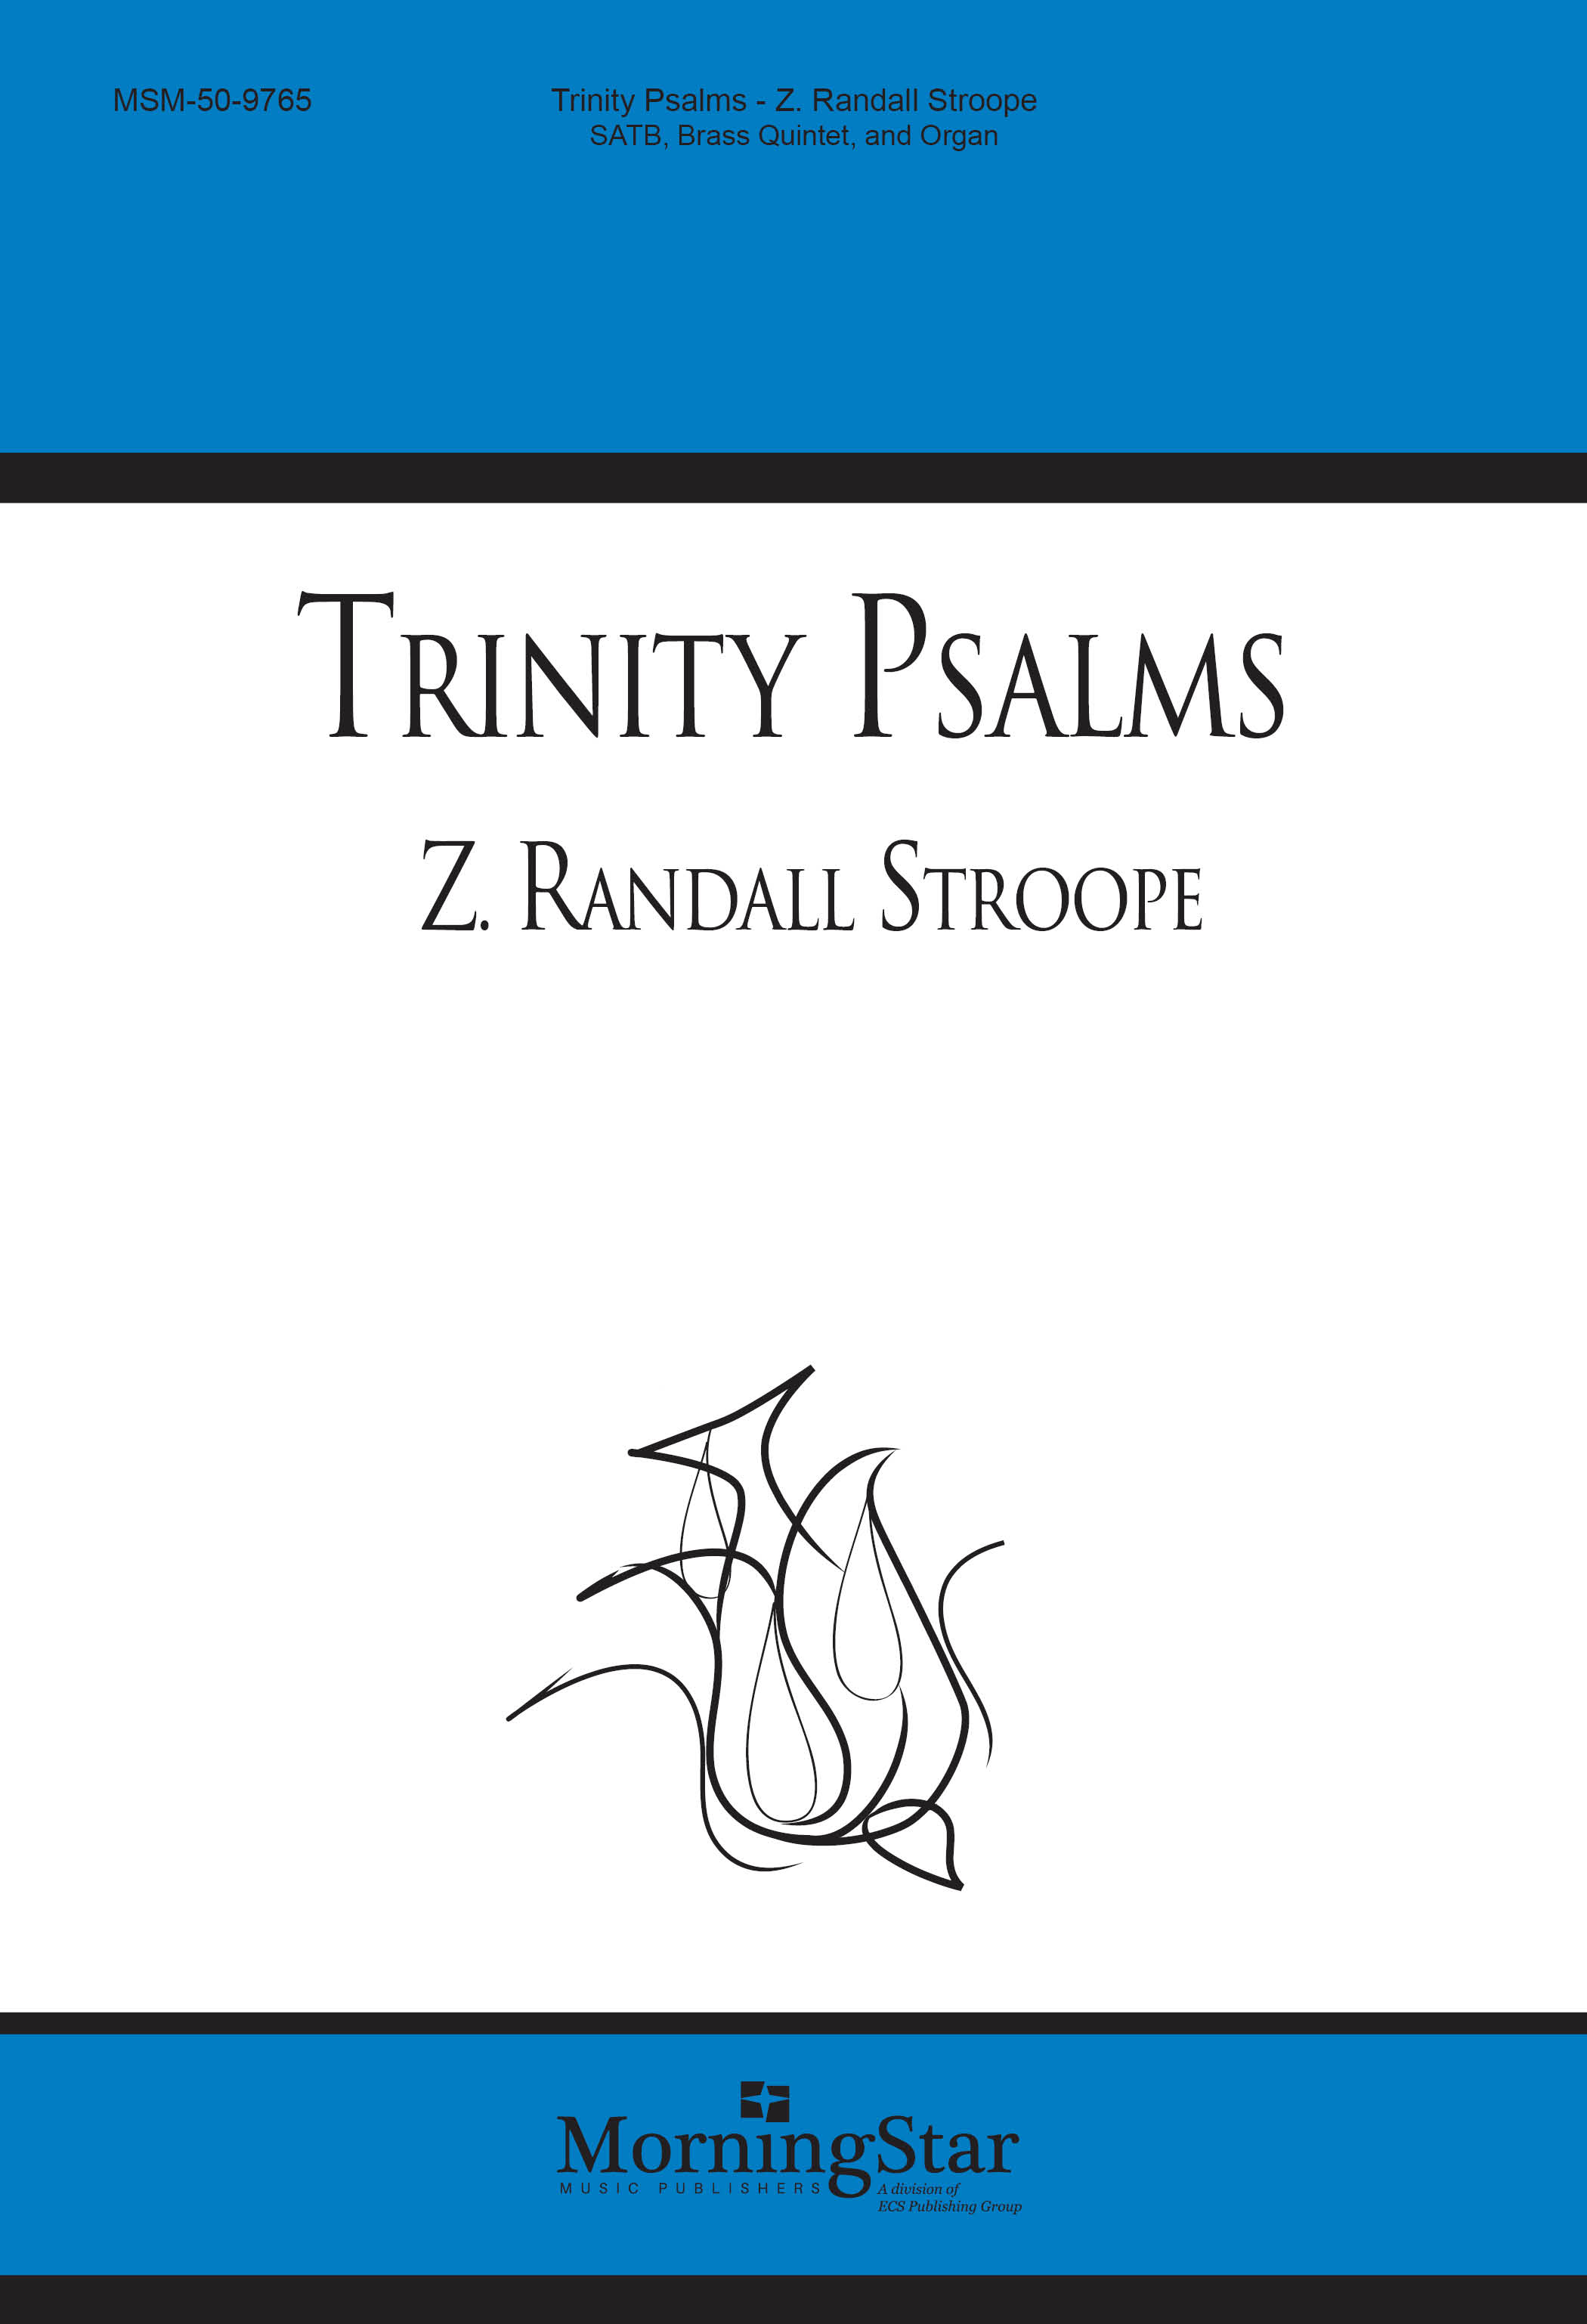 Trinity Psalms : SATB : Z. Randall Stroope : Sheet Music : 50-9765